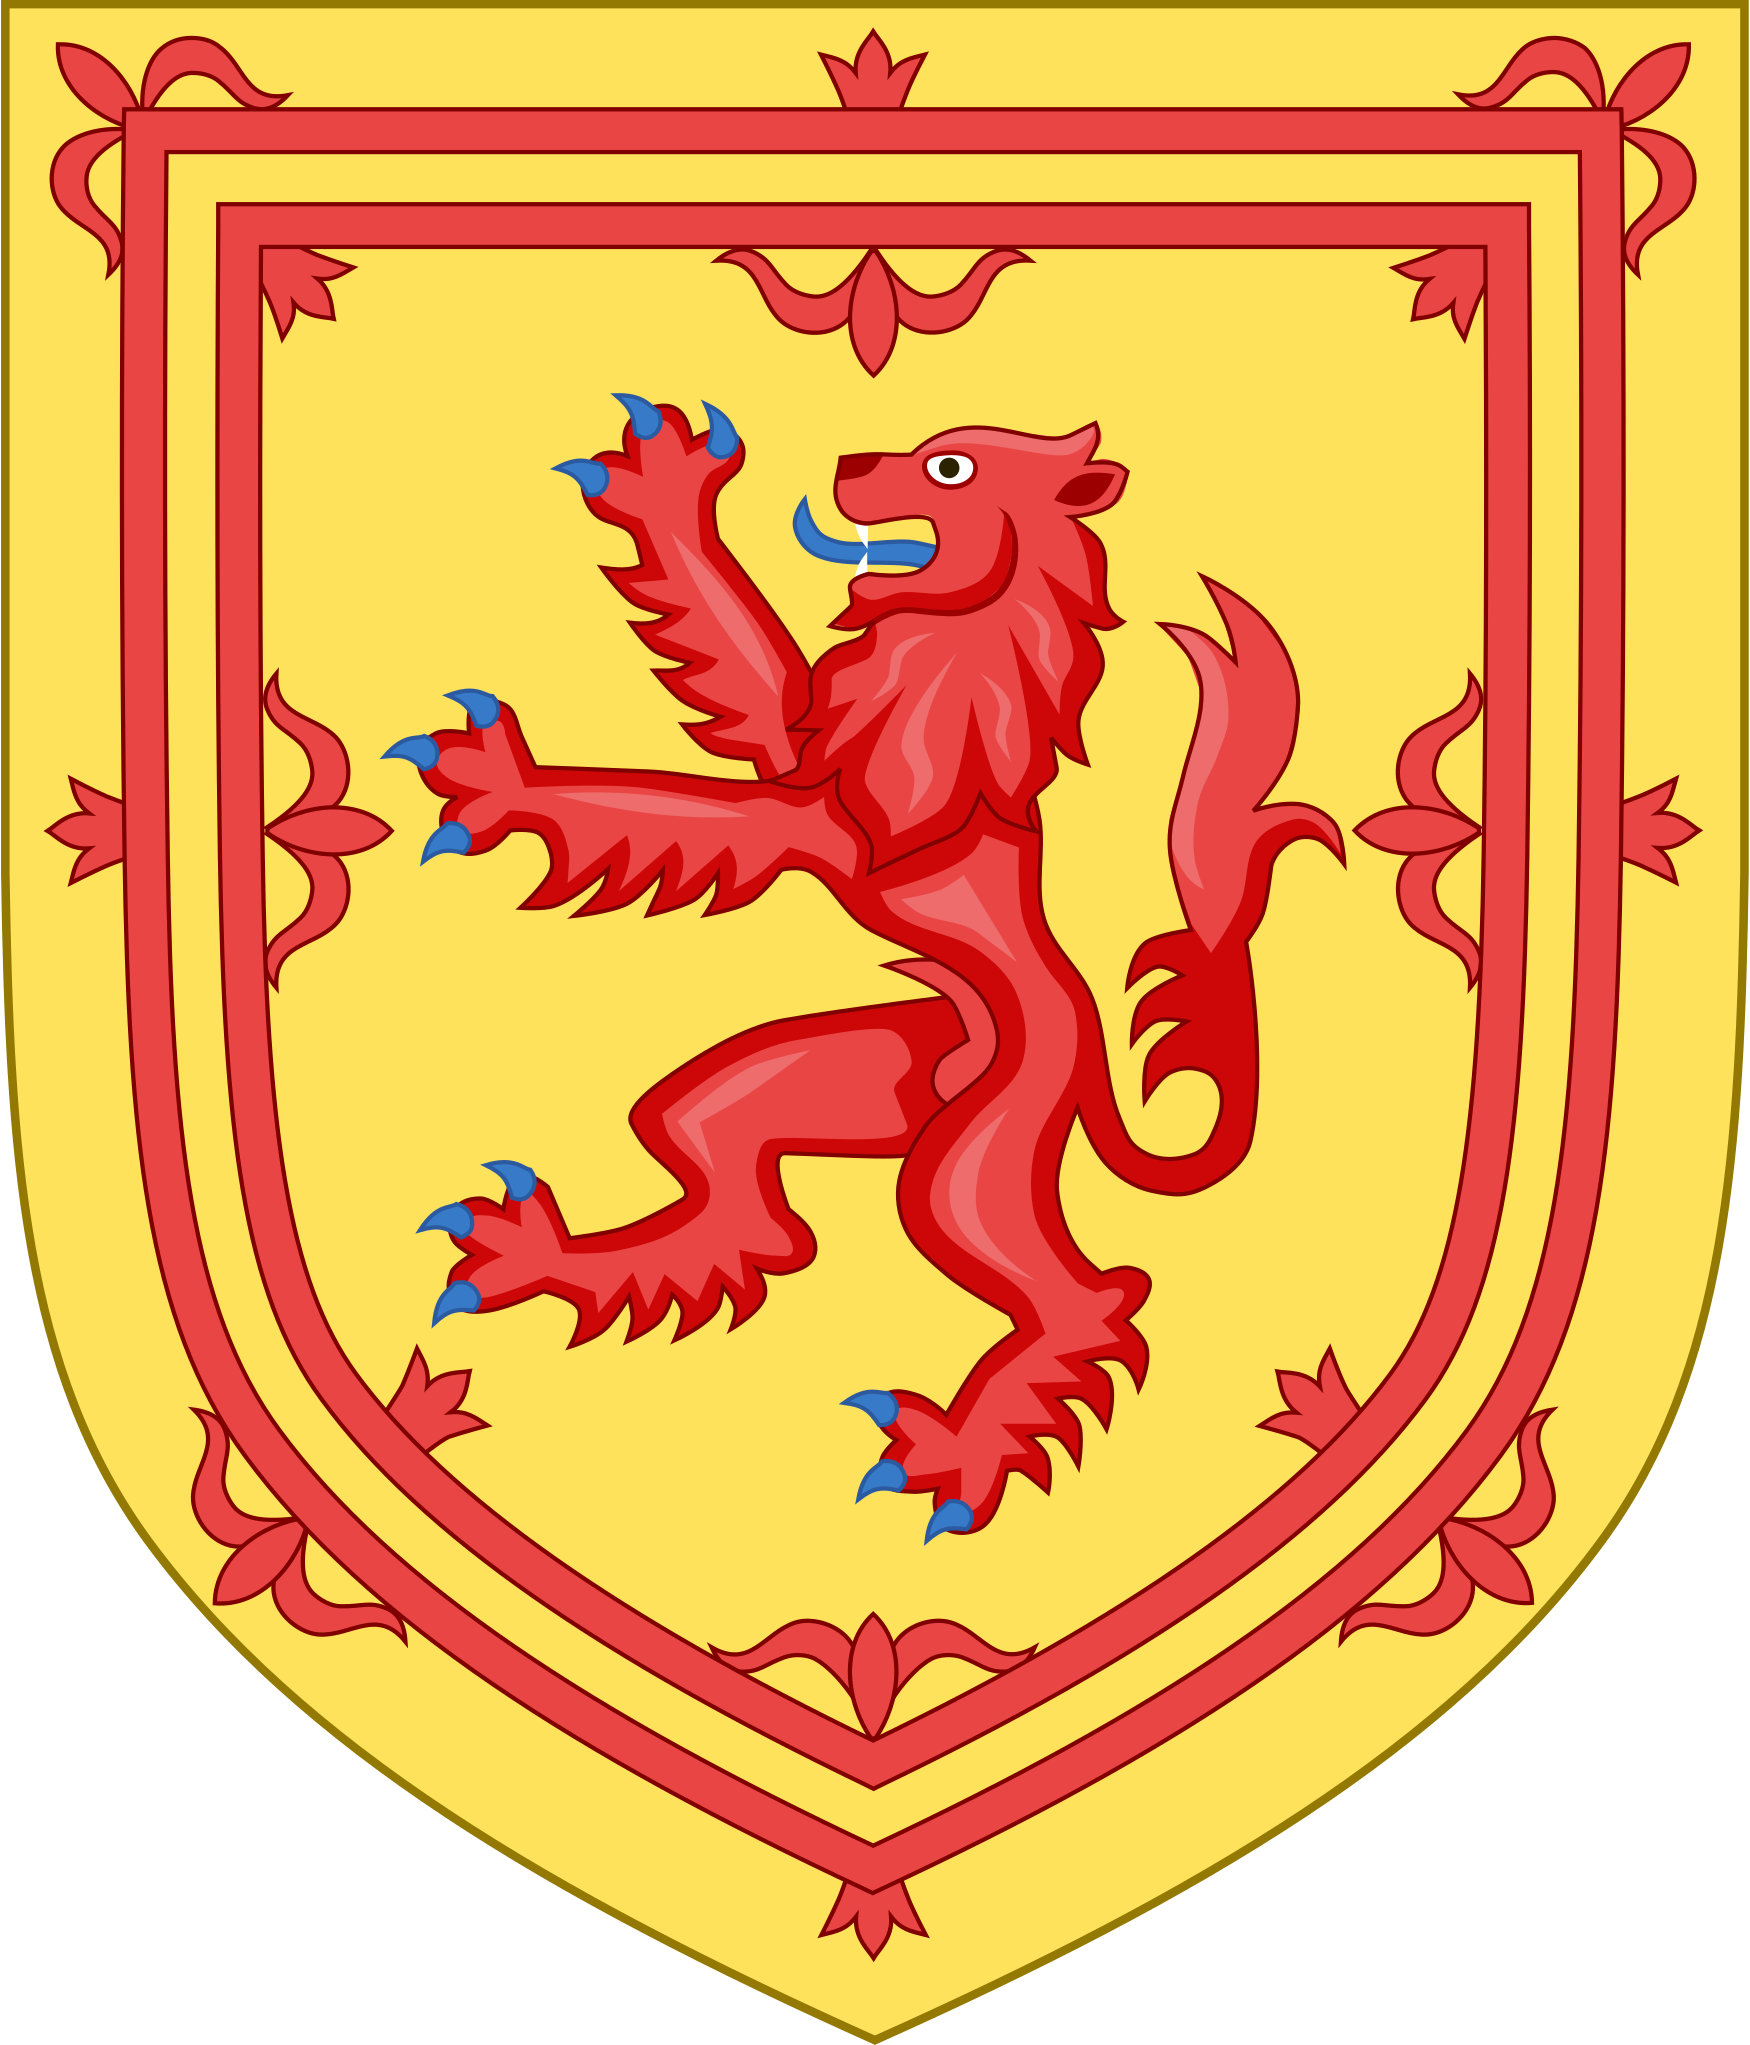 BIG 5x3 FT SCOTLAND ROYAL RAMPANT LION FLAG SCOTTISH KING OF SCOTS ARMS KINGDOM 